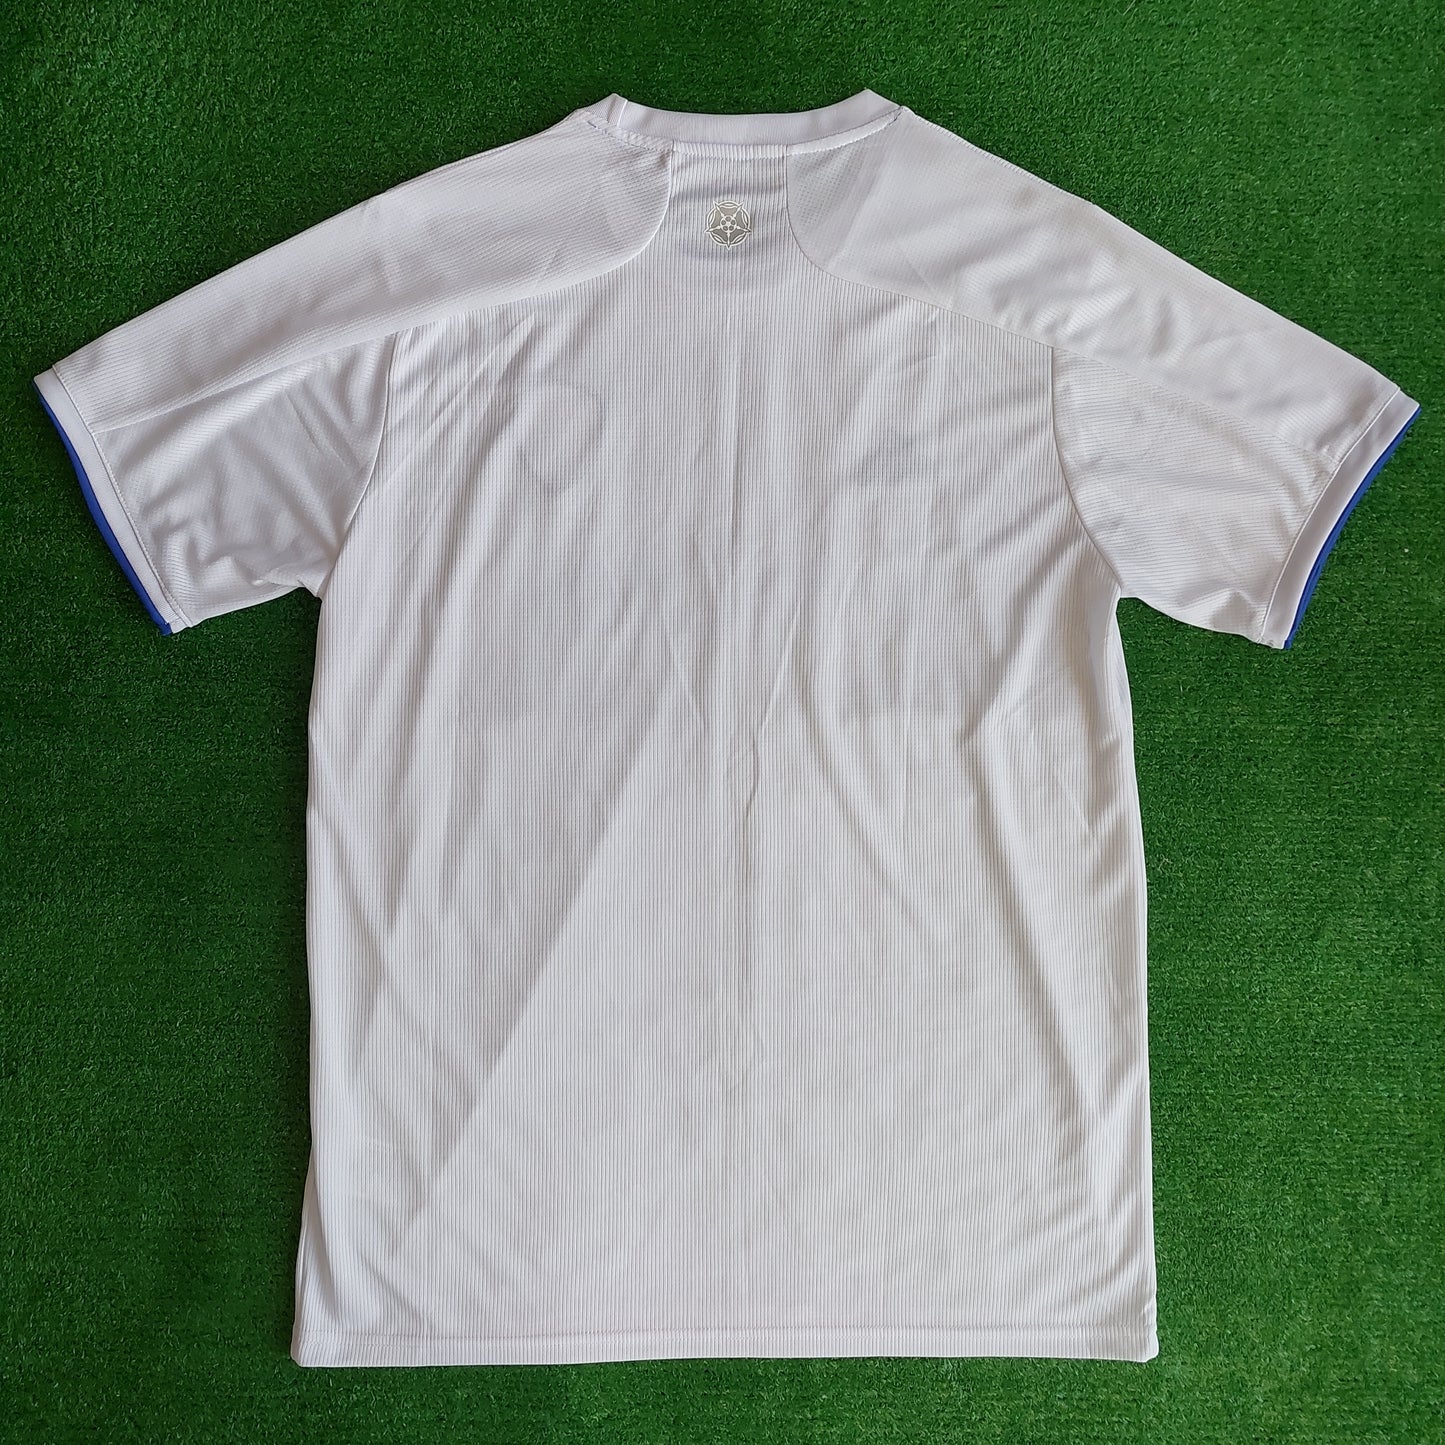 Leeds United 2020/21 Home Shirt (Excellent) - Size XL